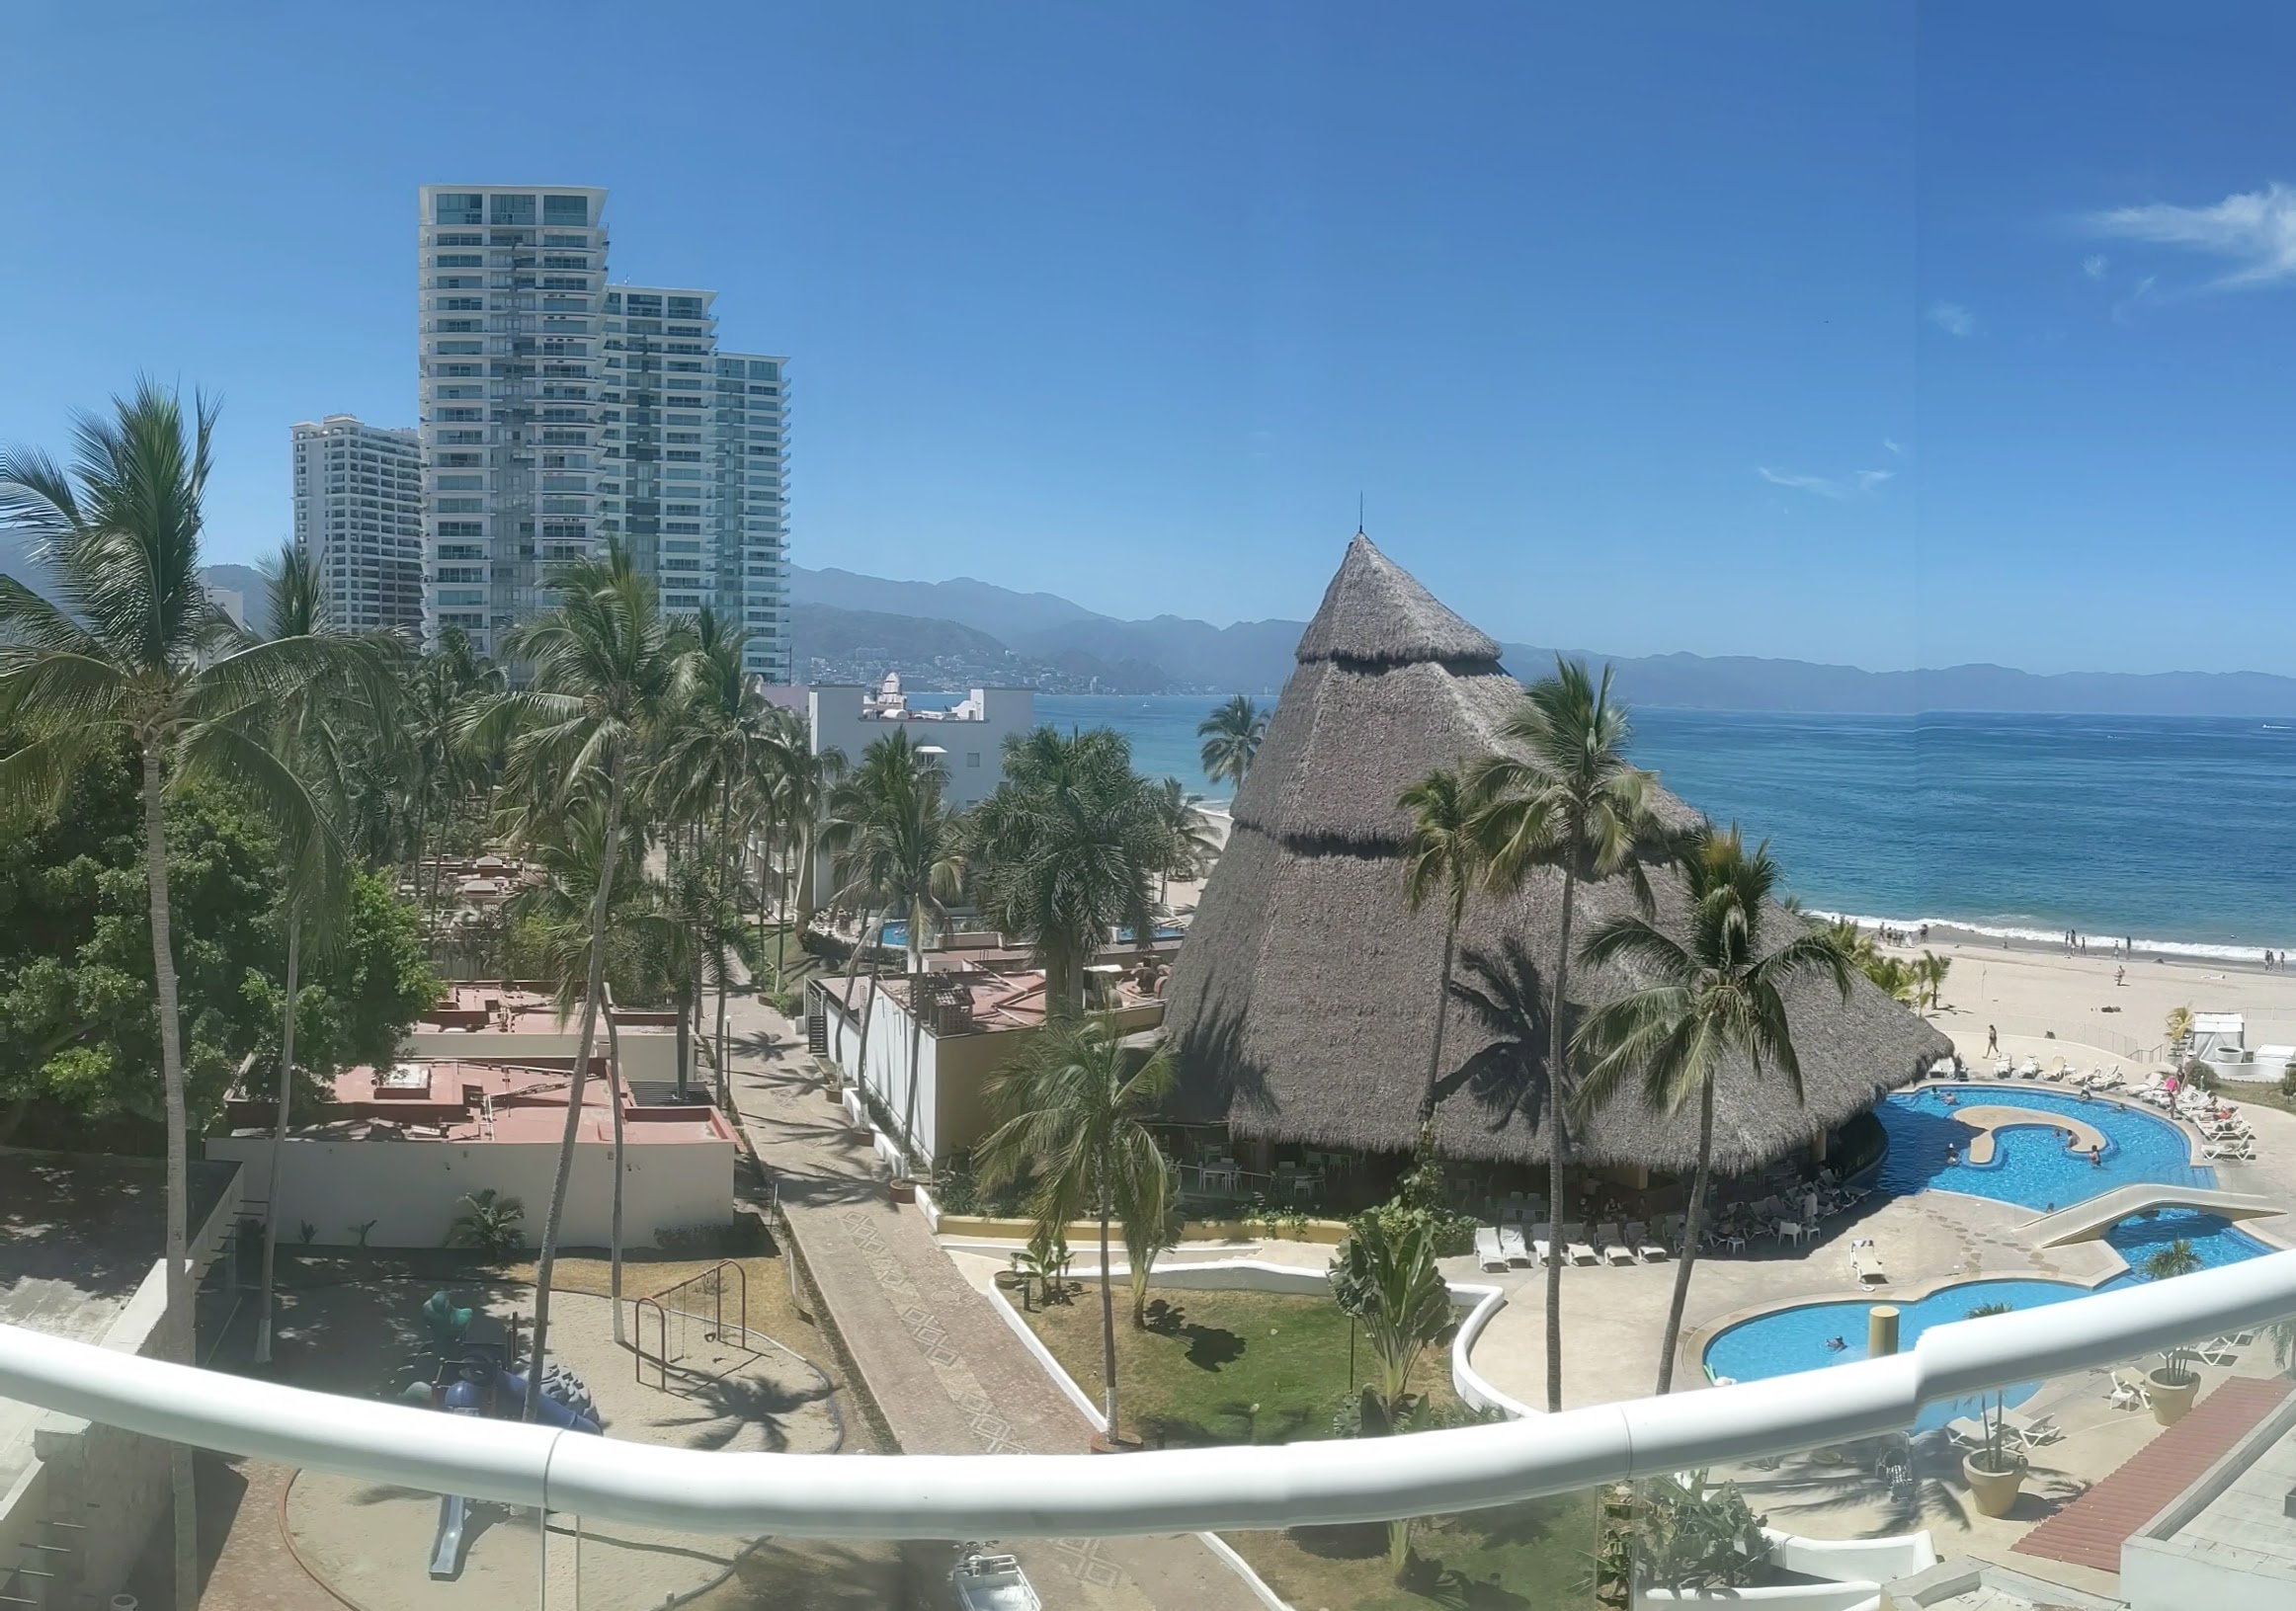 Mexican resort